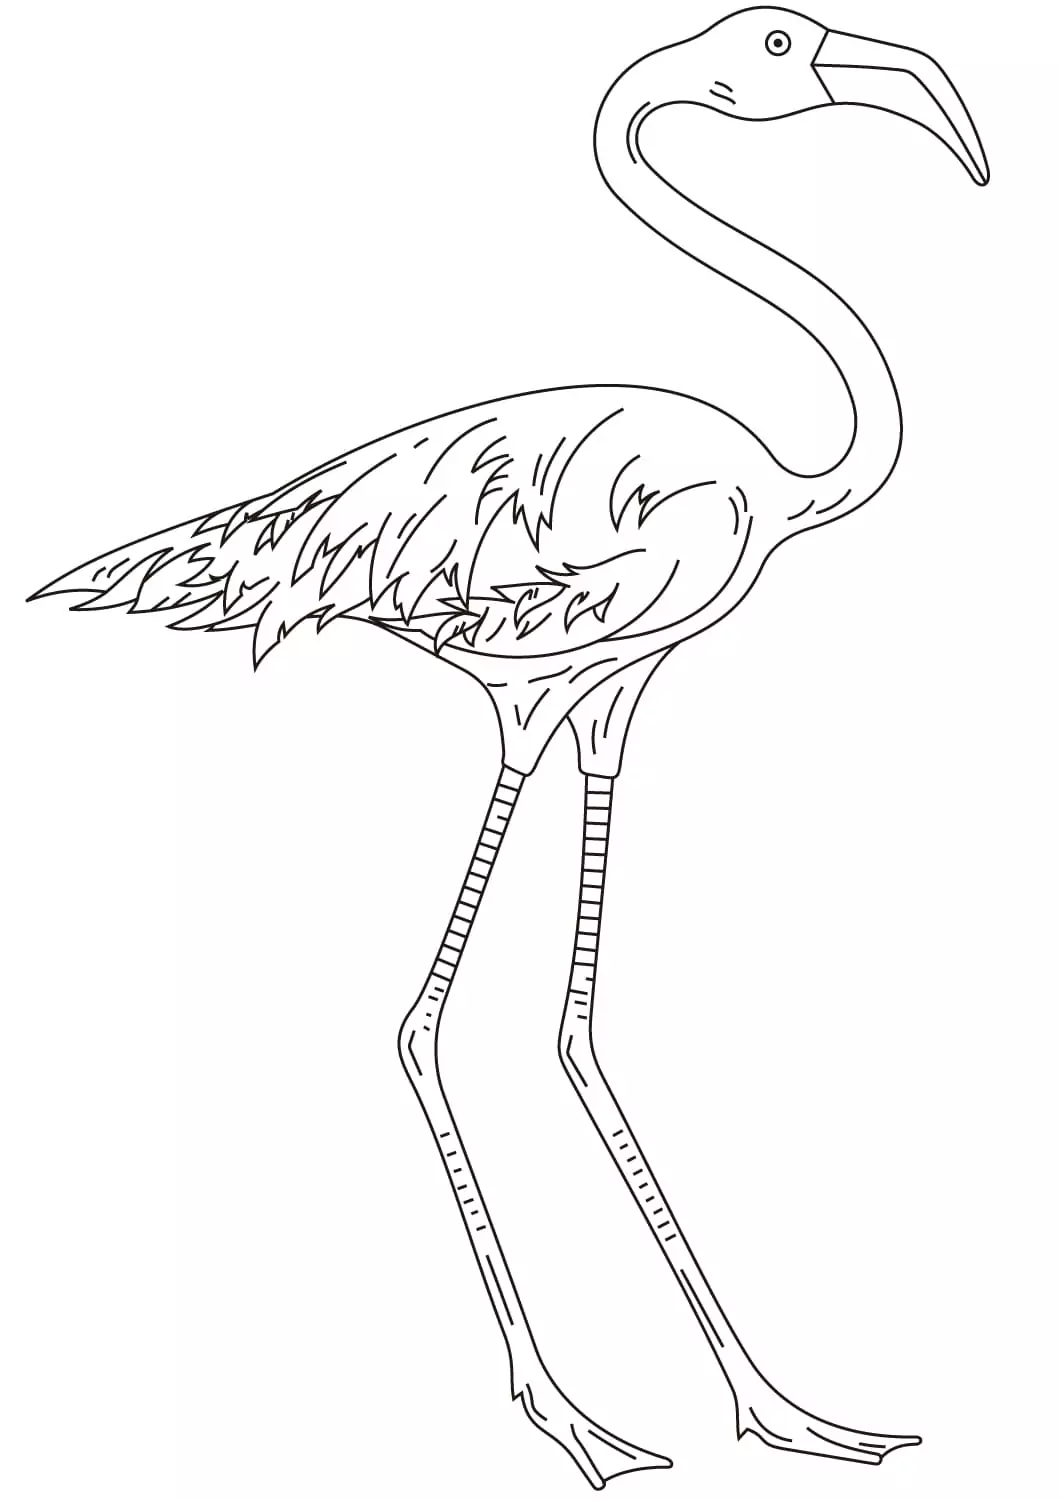 Flamingo with long leg